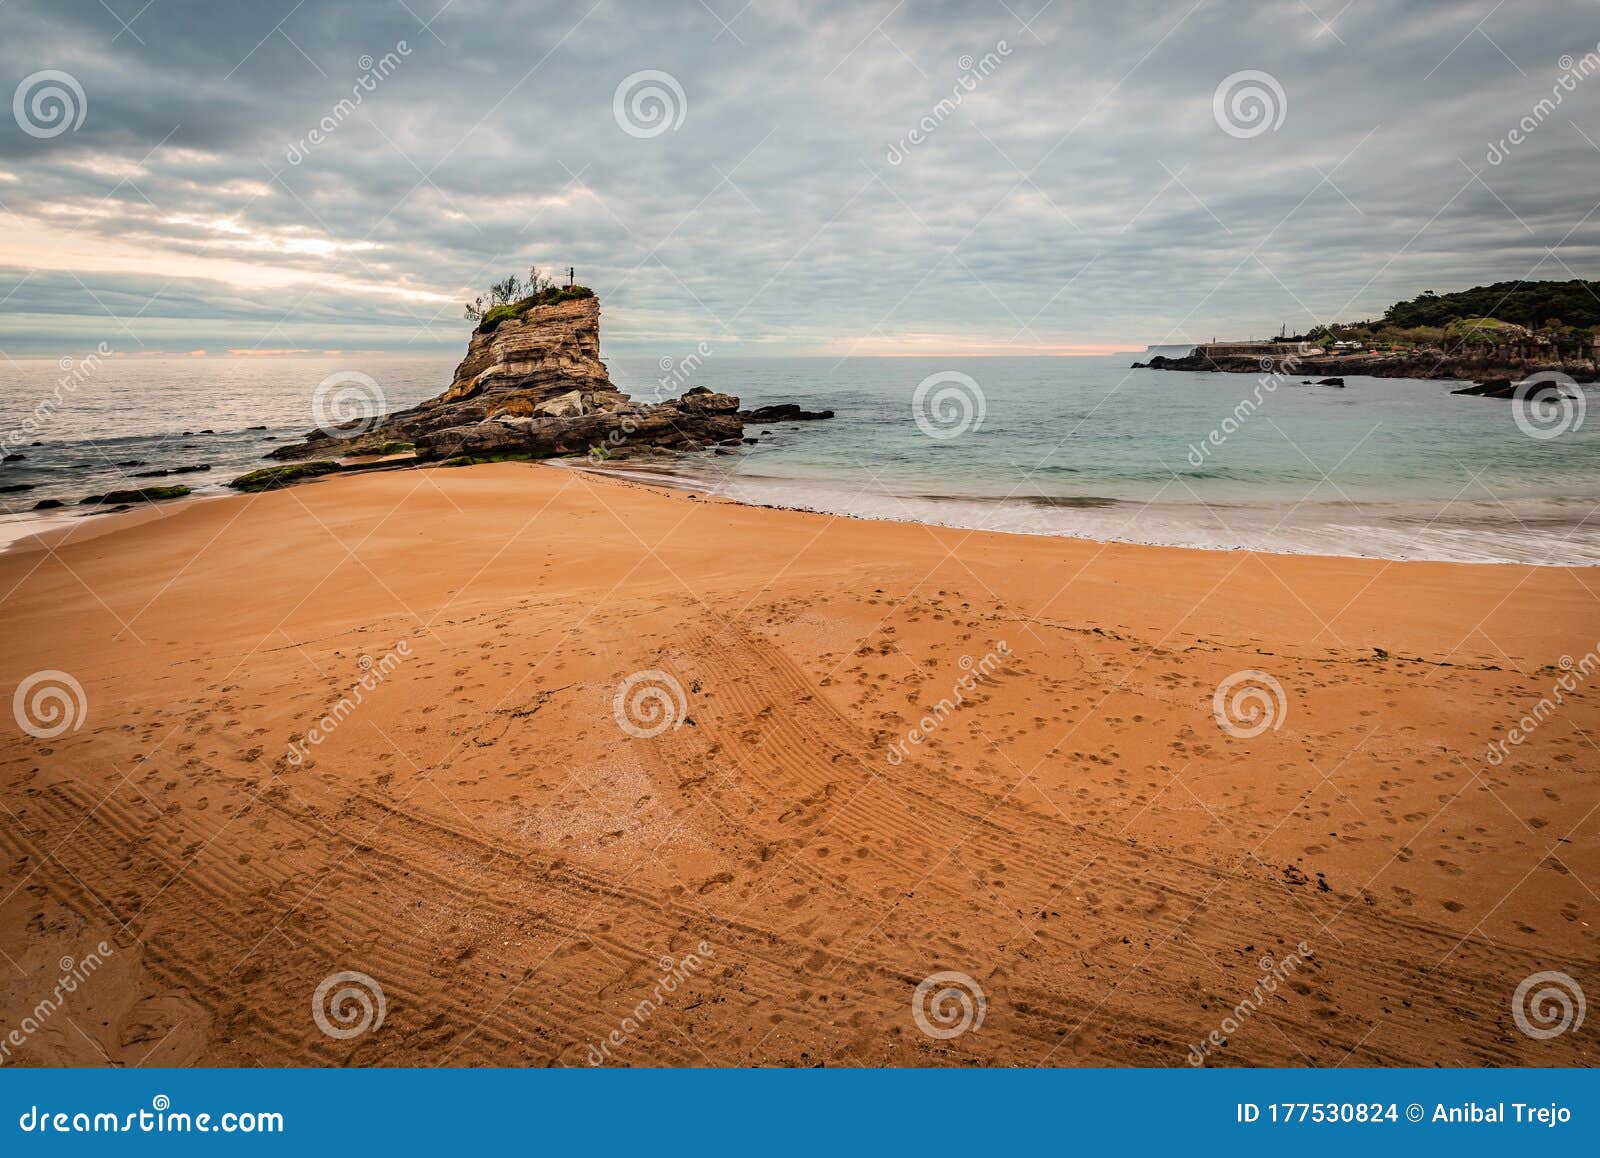 camello beach in santander, cantabria, spain